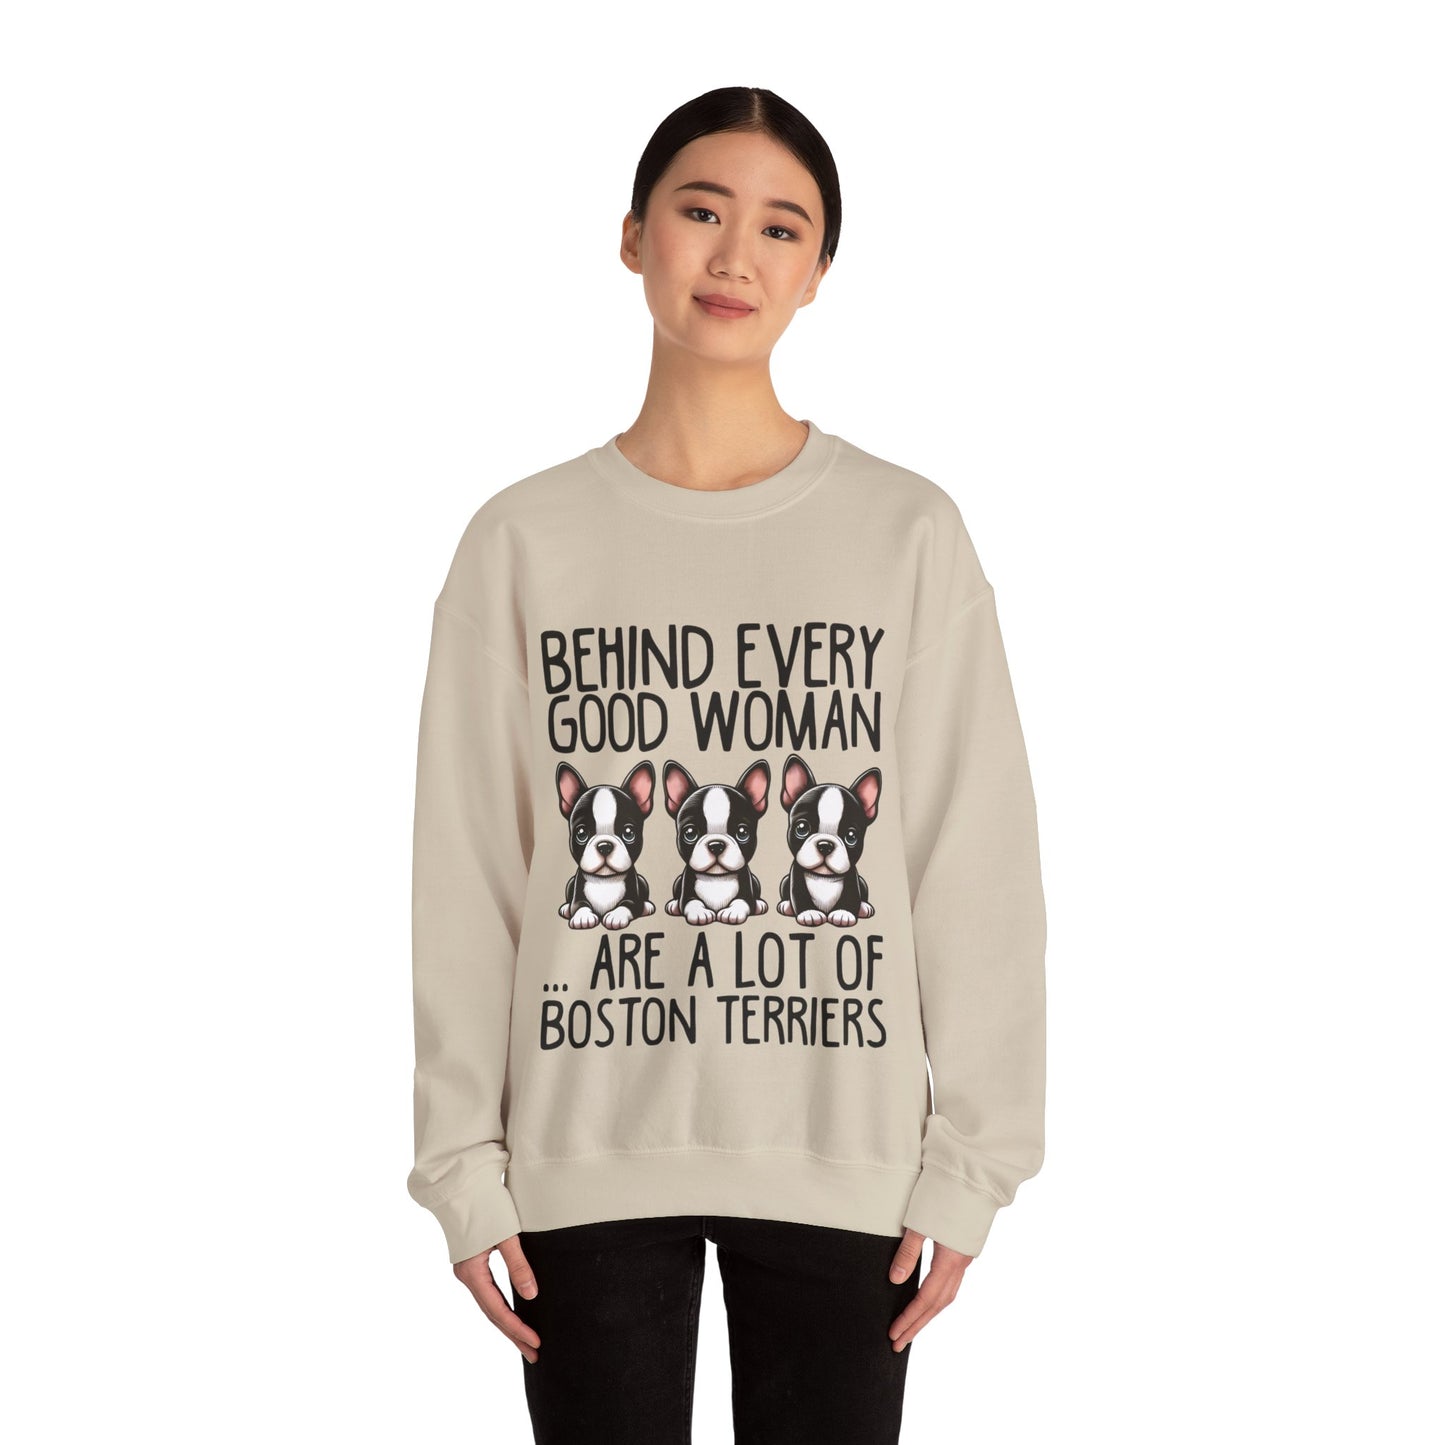 Isabella - Unisex Sweatshirt for Boston Terrier lovers